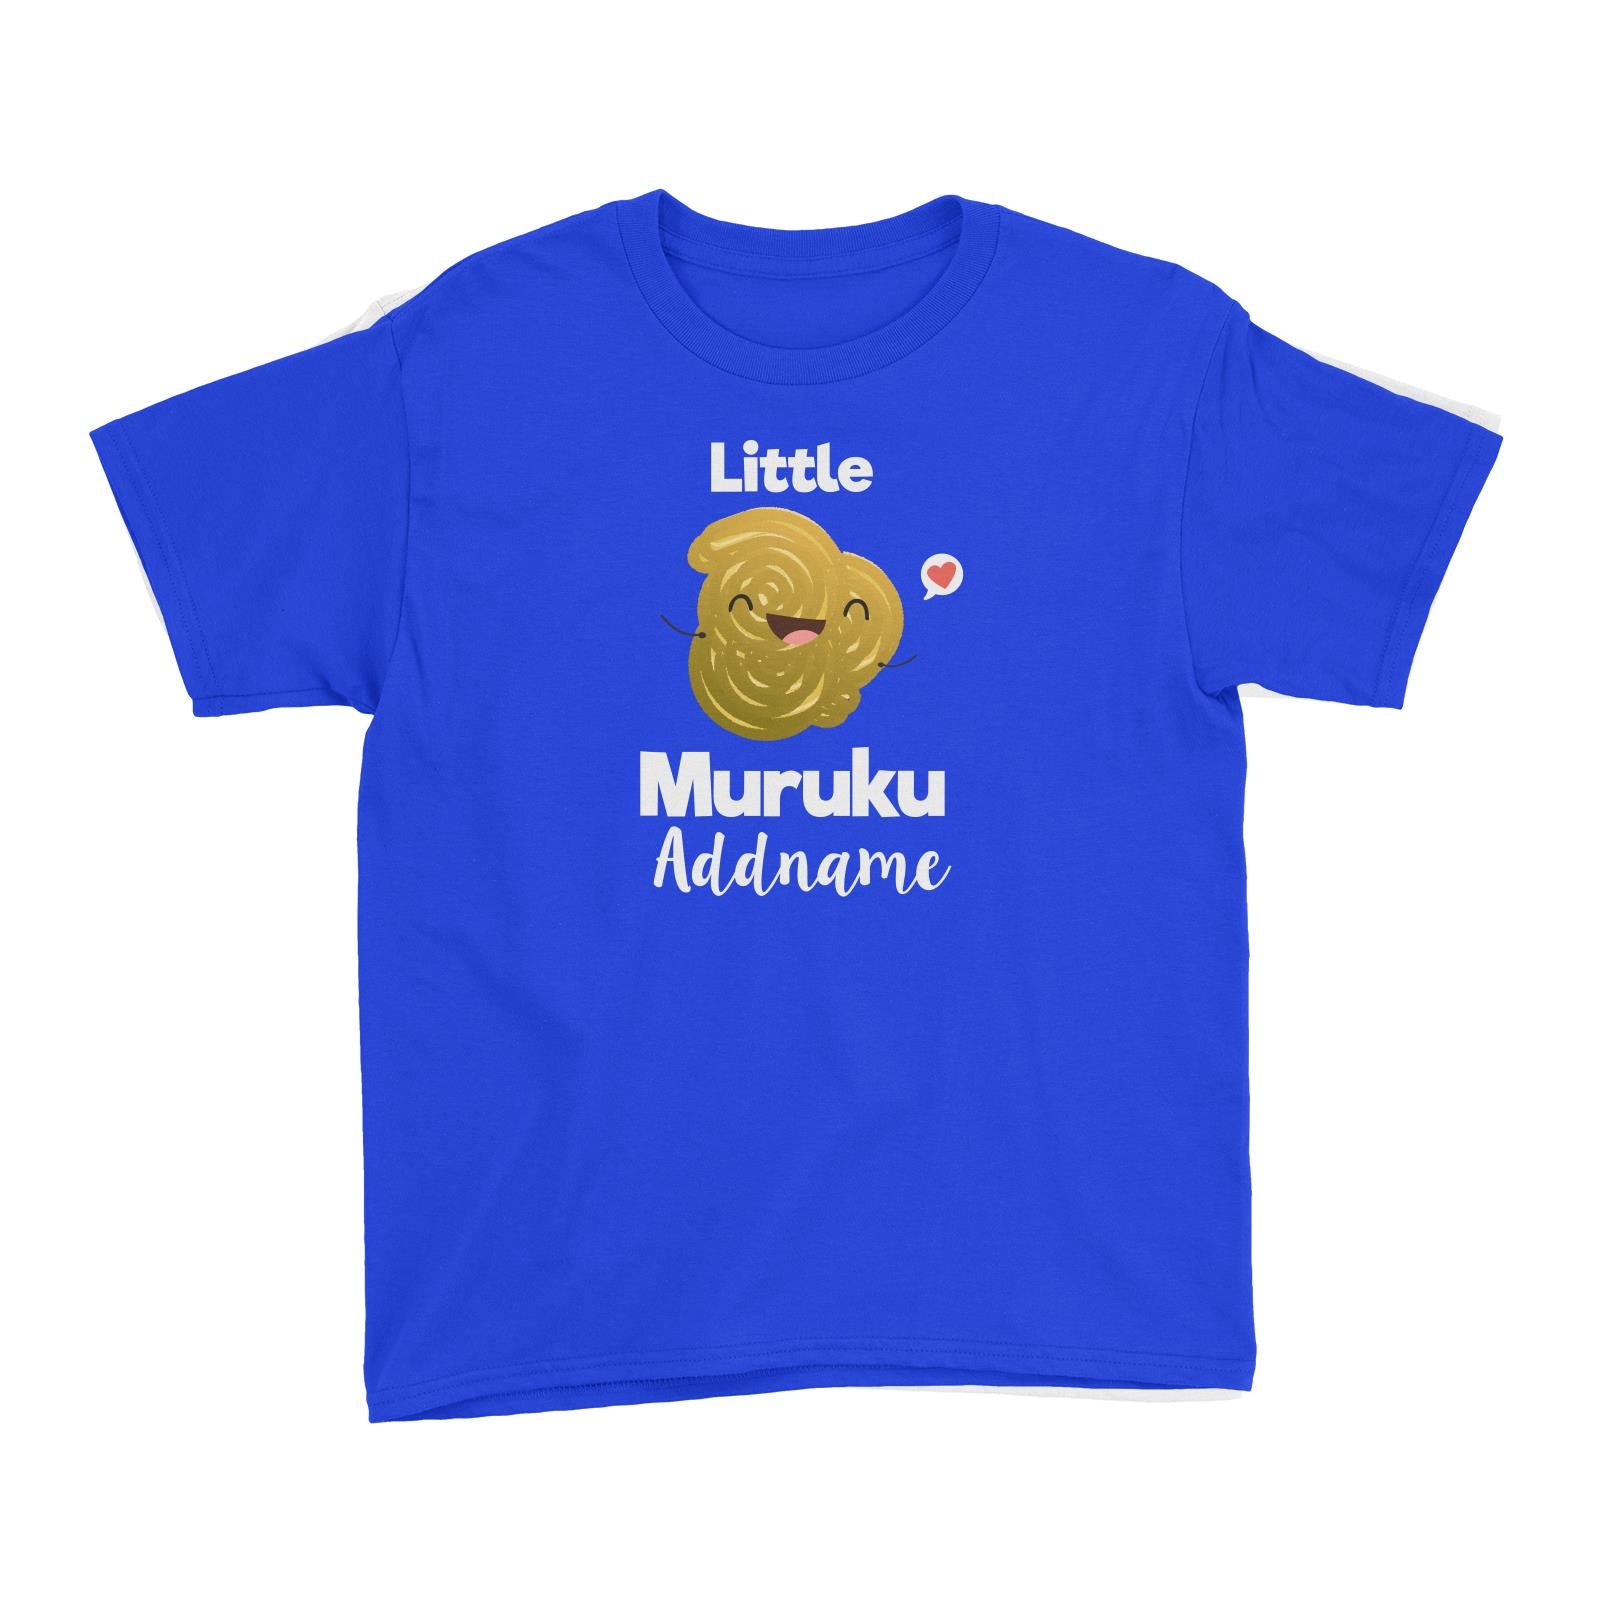 Little Muruku Addname Kid's T-Shirt